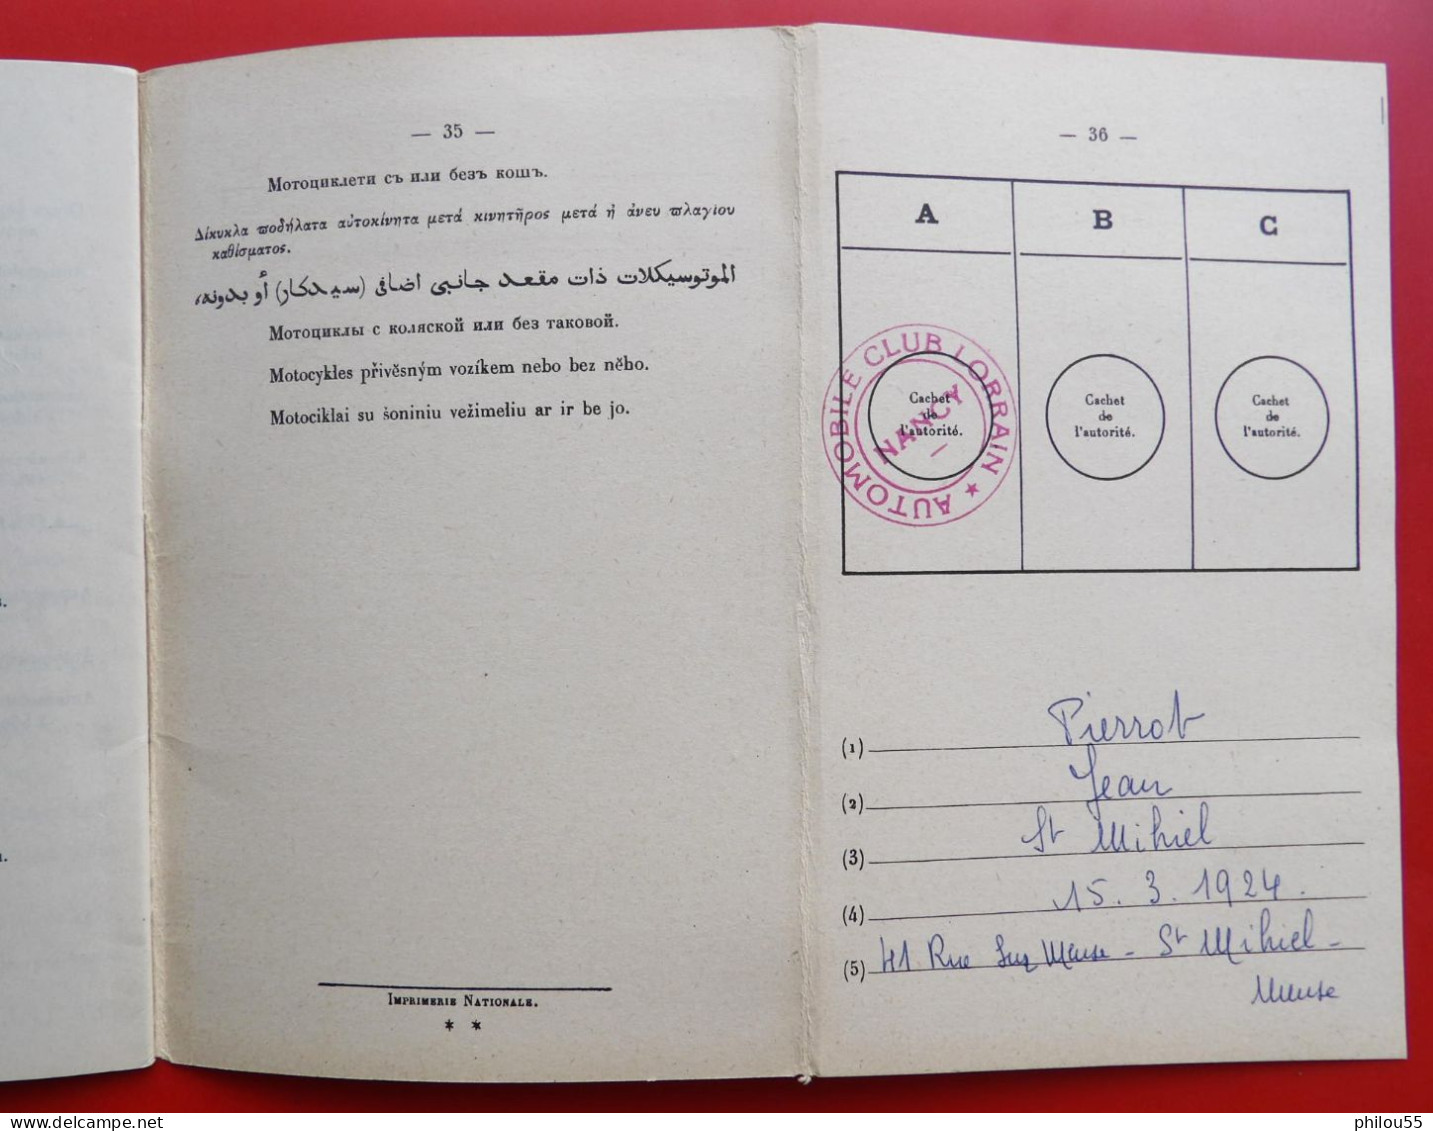 55 SAINT MIHIEL 1958 PERMIS INTERNATIONAL DE CONDUIRE tampons ACL  timbres fiscaux 1 an